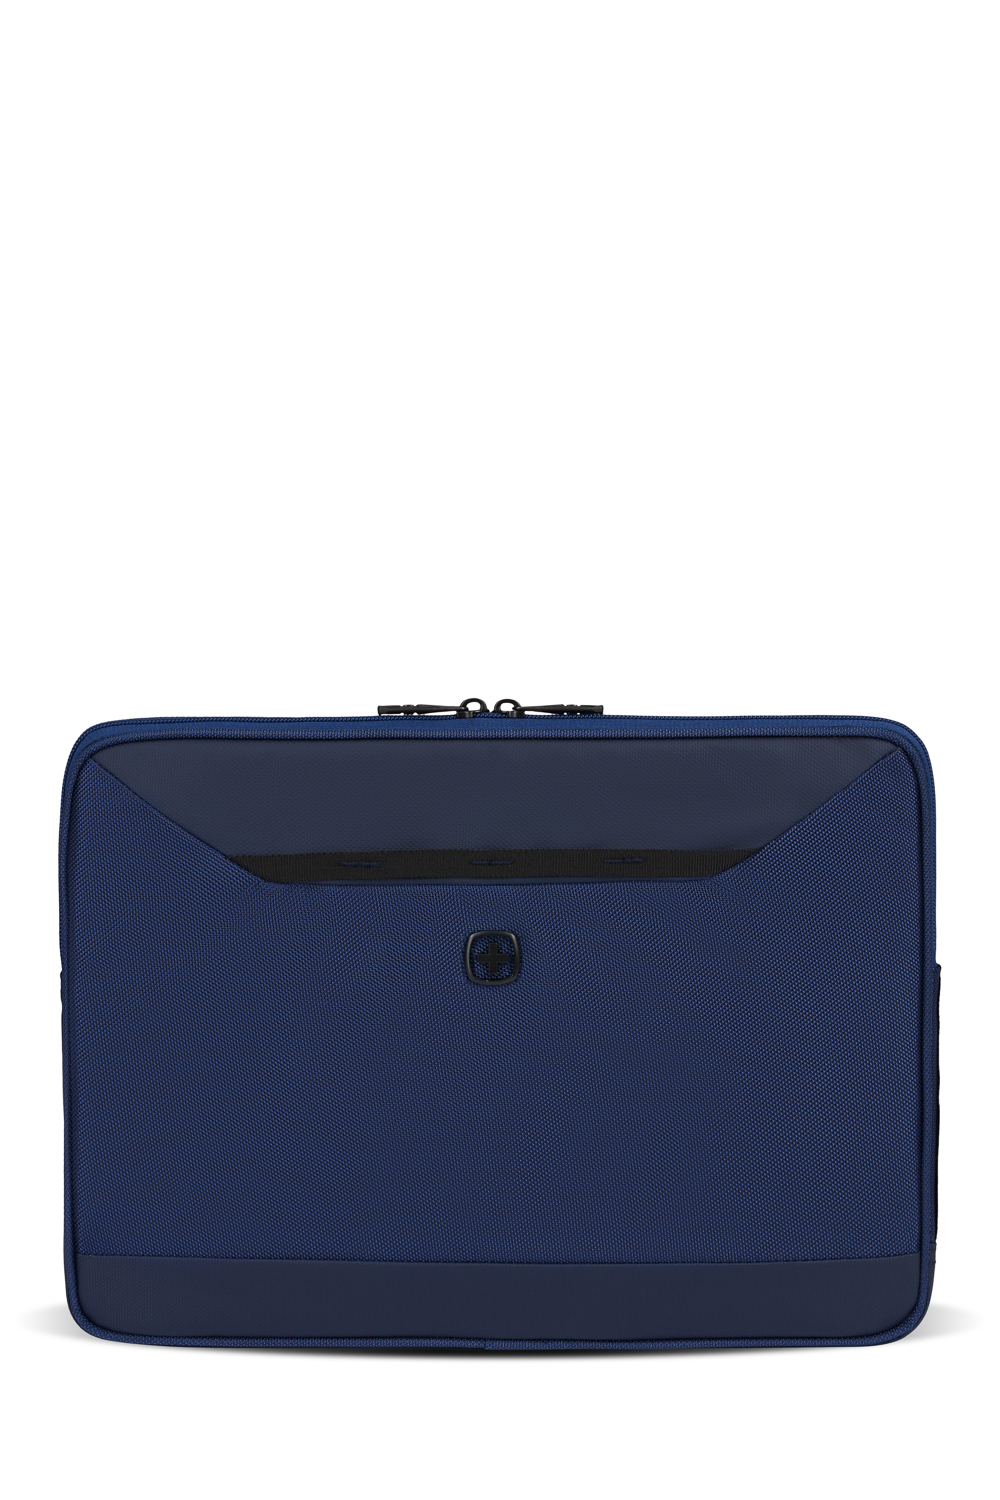 Swissgear 3852 16 inch Padded Laptop Sleeve - Ballistic Navy Blue